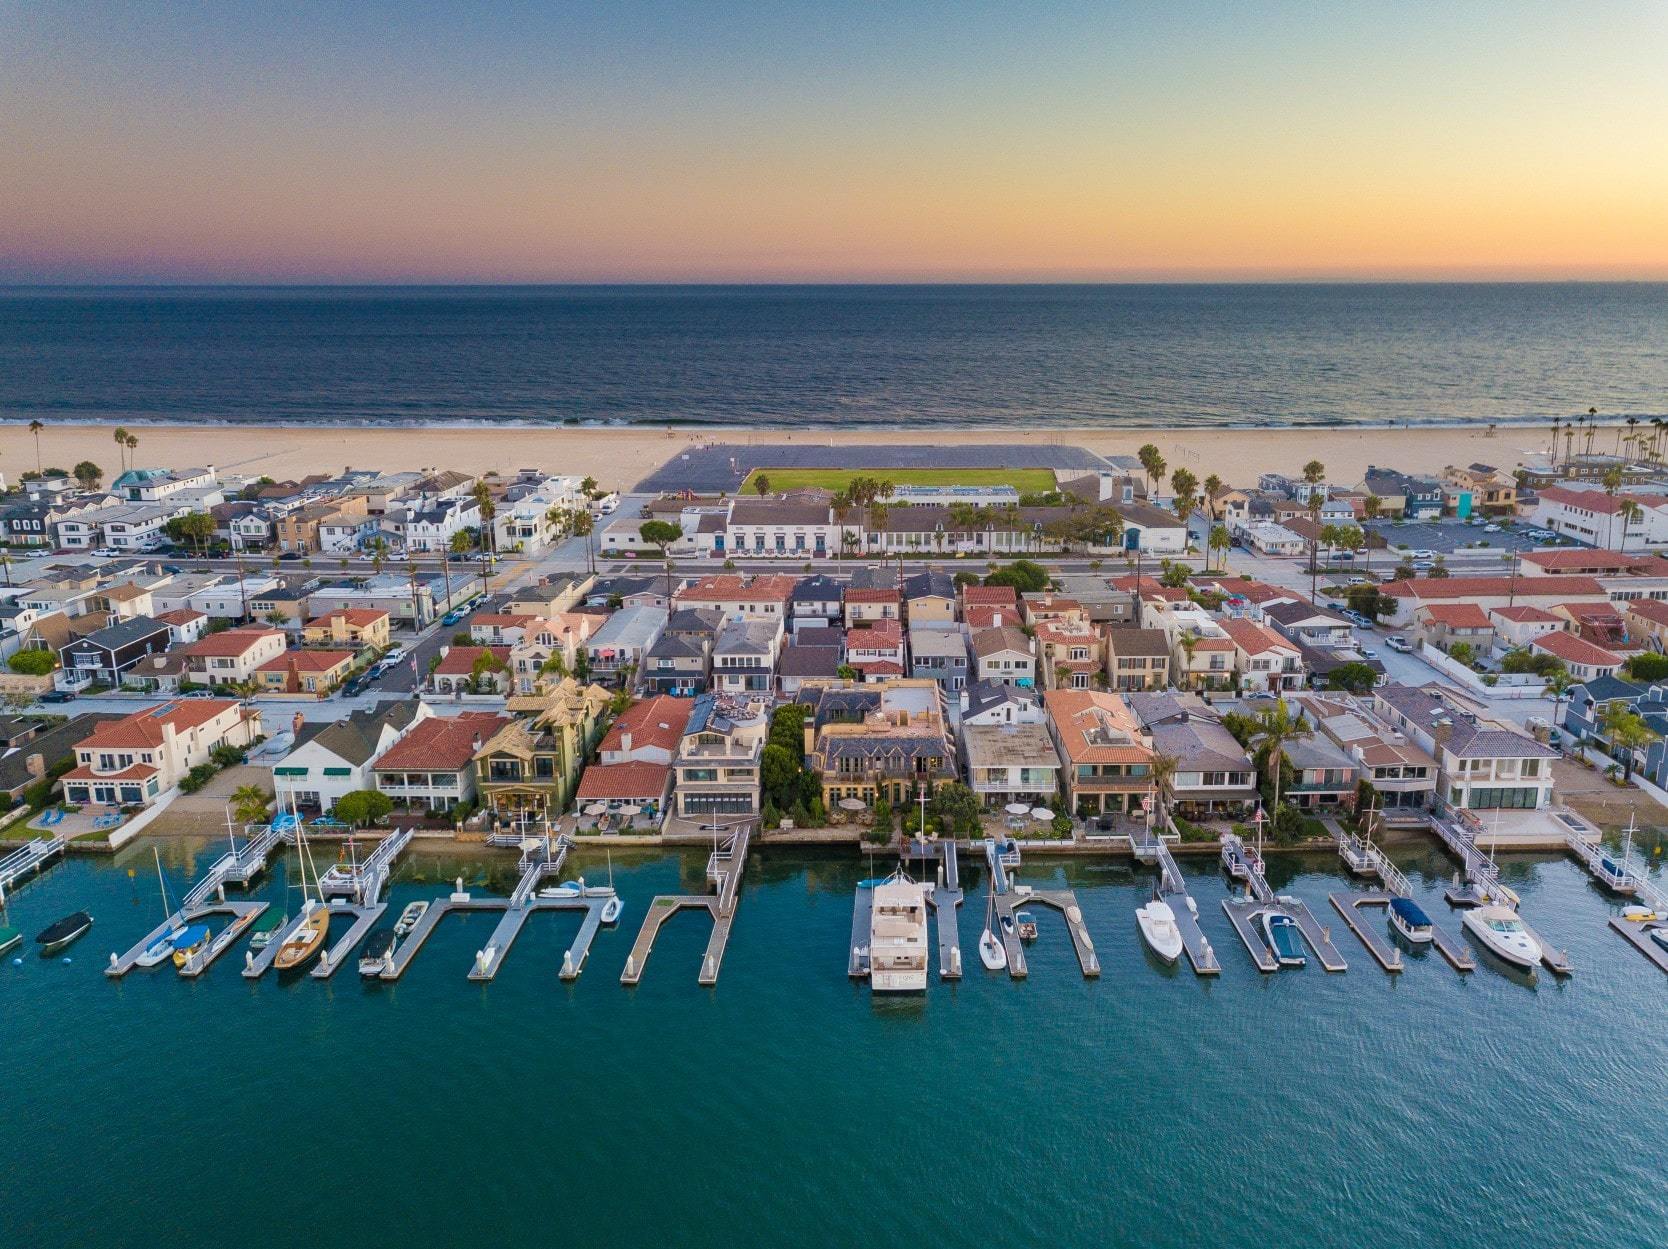 Aerial view of Balboa Peninsula and waterfront real estate in Newport Beach, California